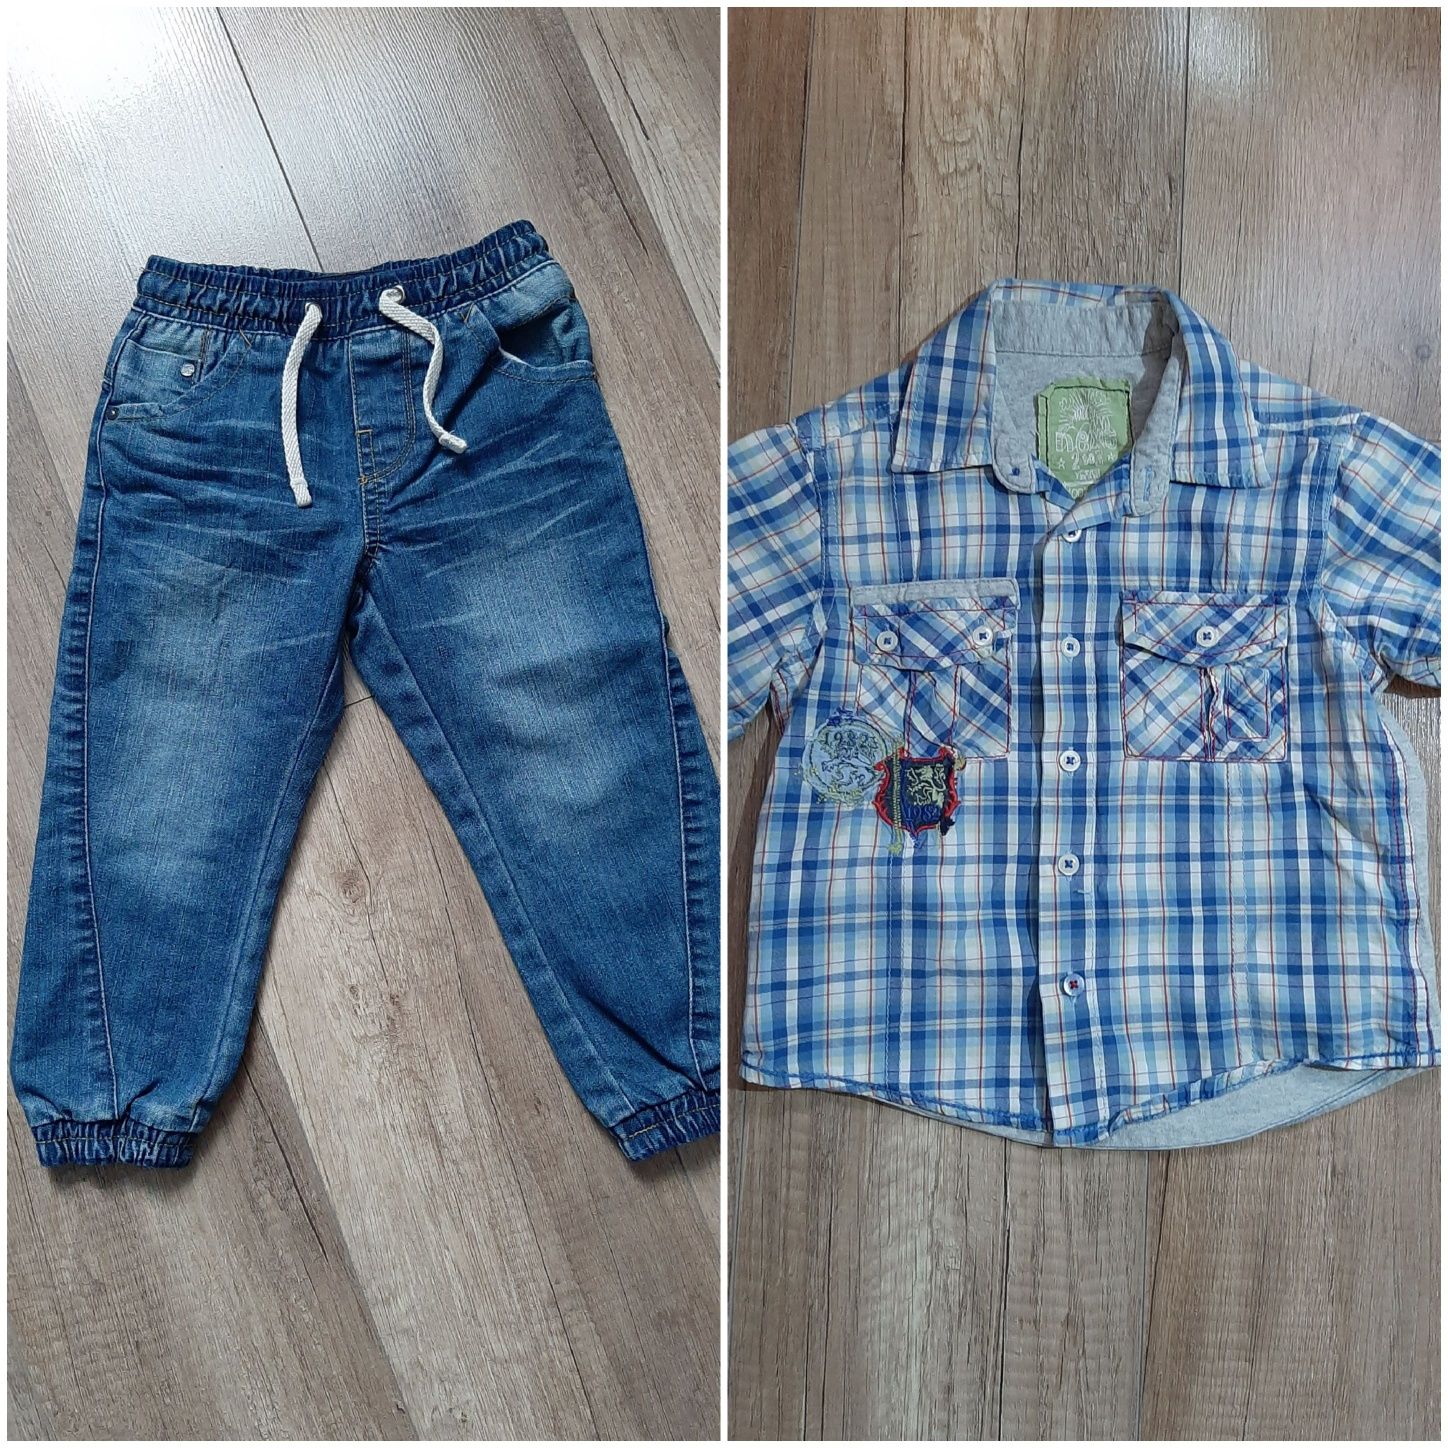 Spodnie jeansy CUBUS i koszula NEXT r.98